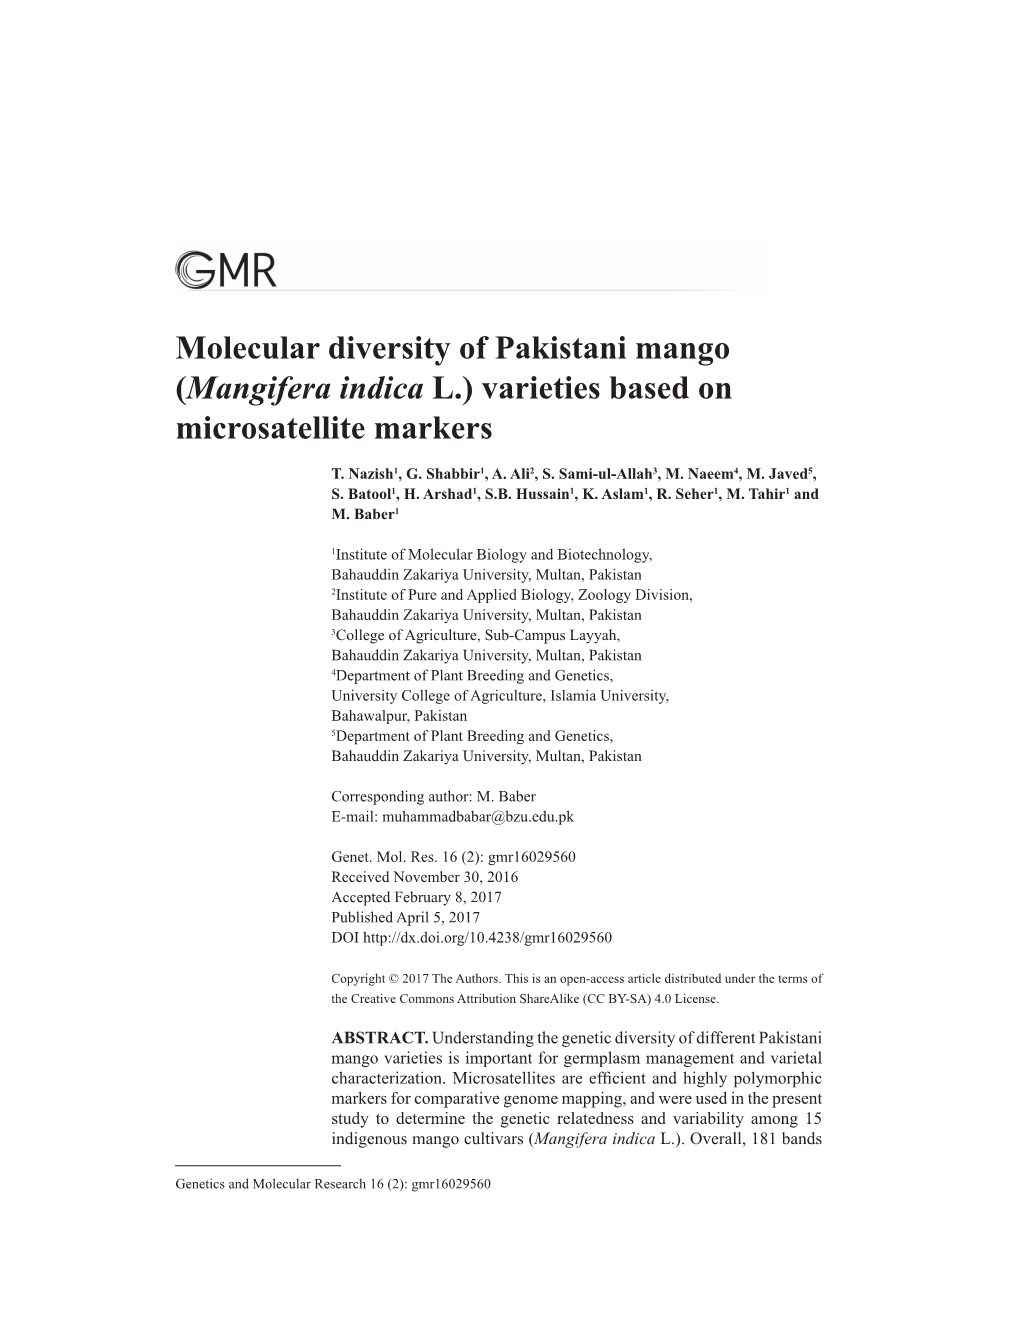 Molecular Diversity of Pakistani Mango (Mangifera Indica L.) Varieties Based on Microsatellite Markers